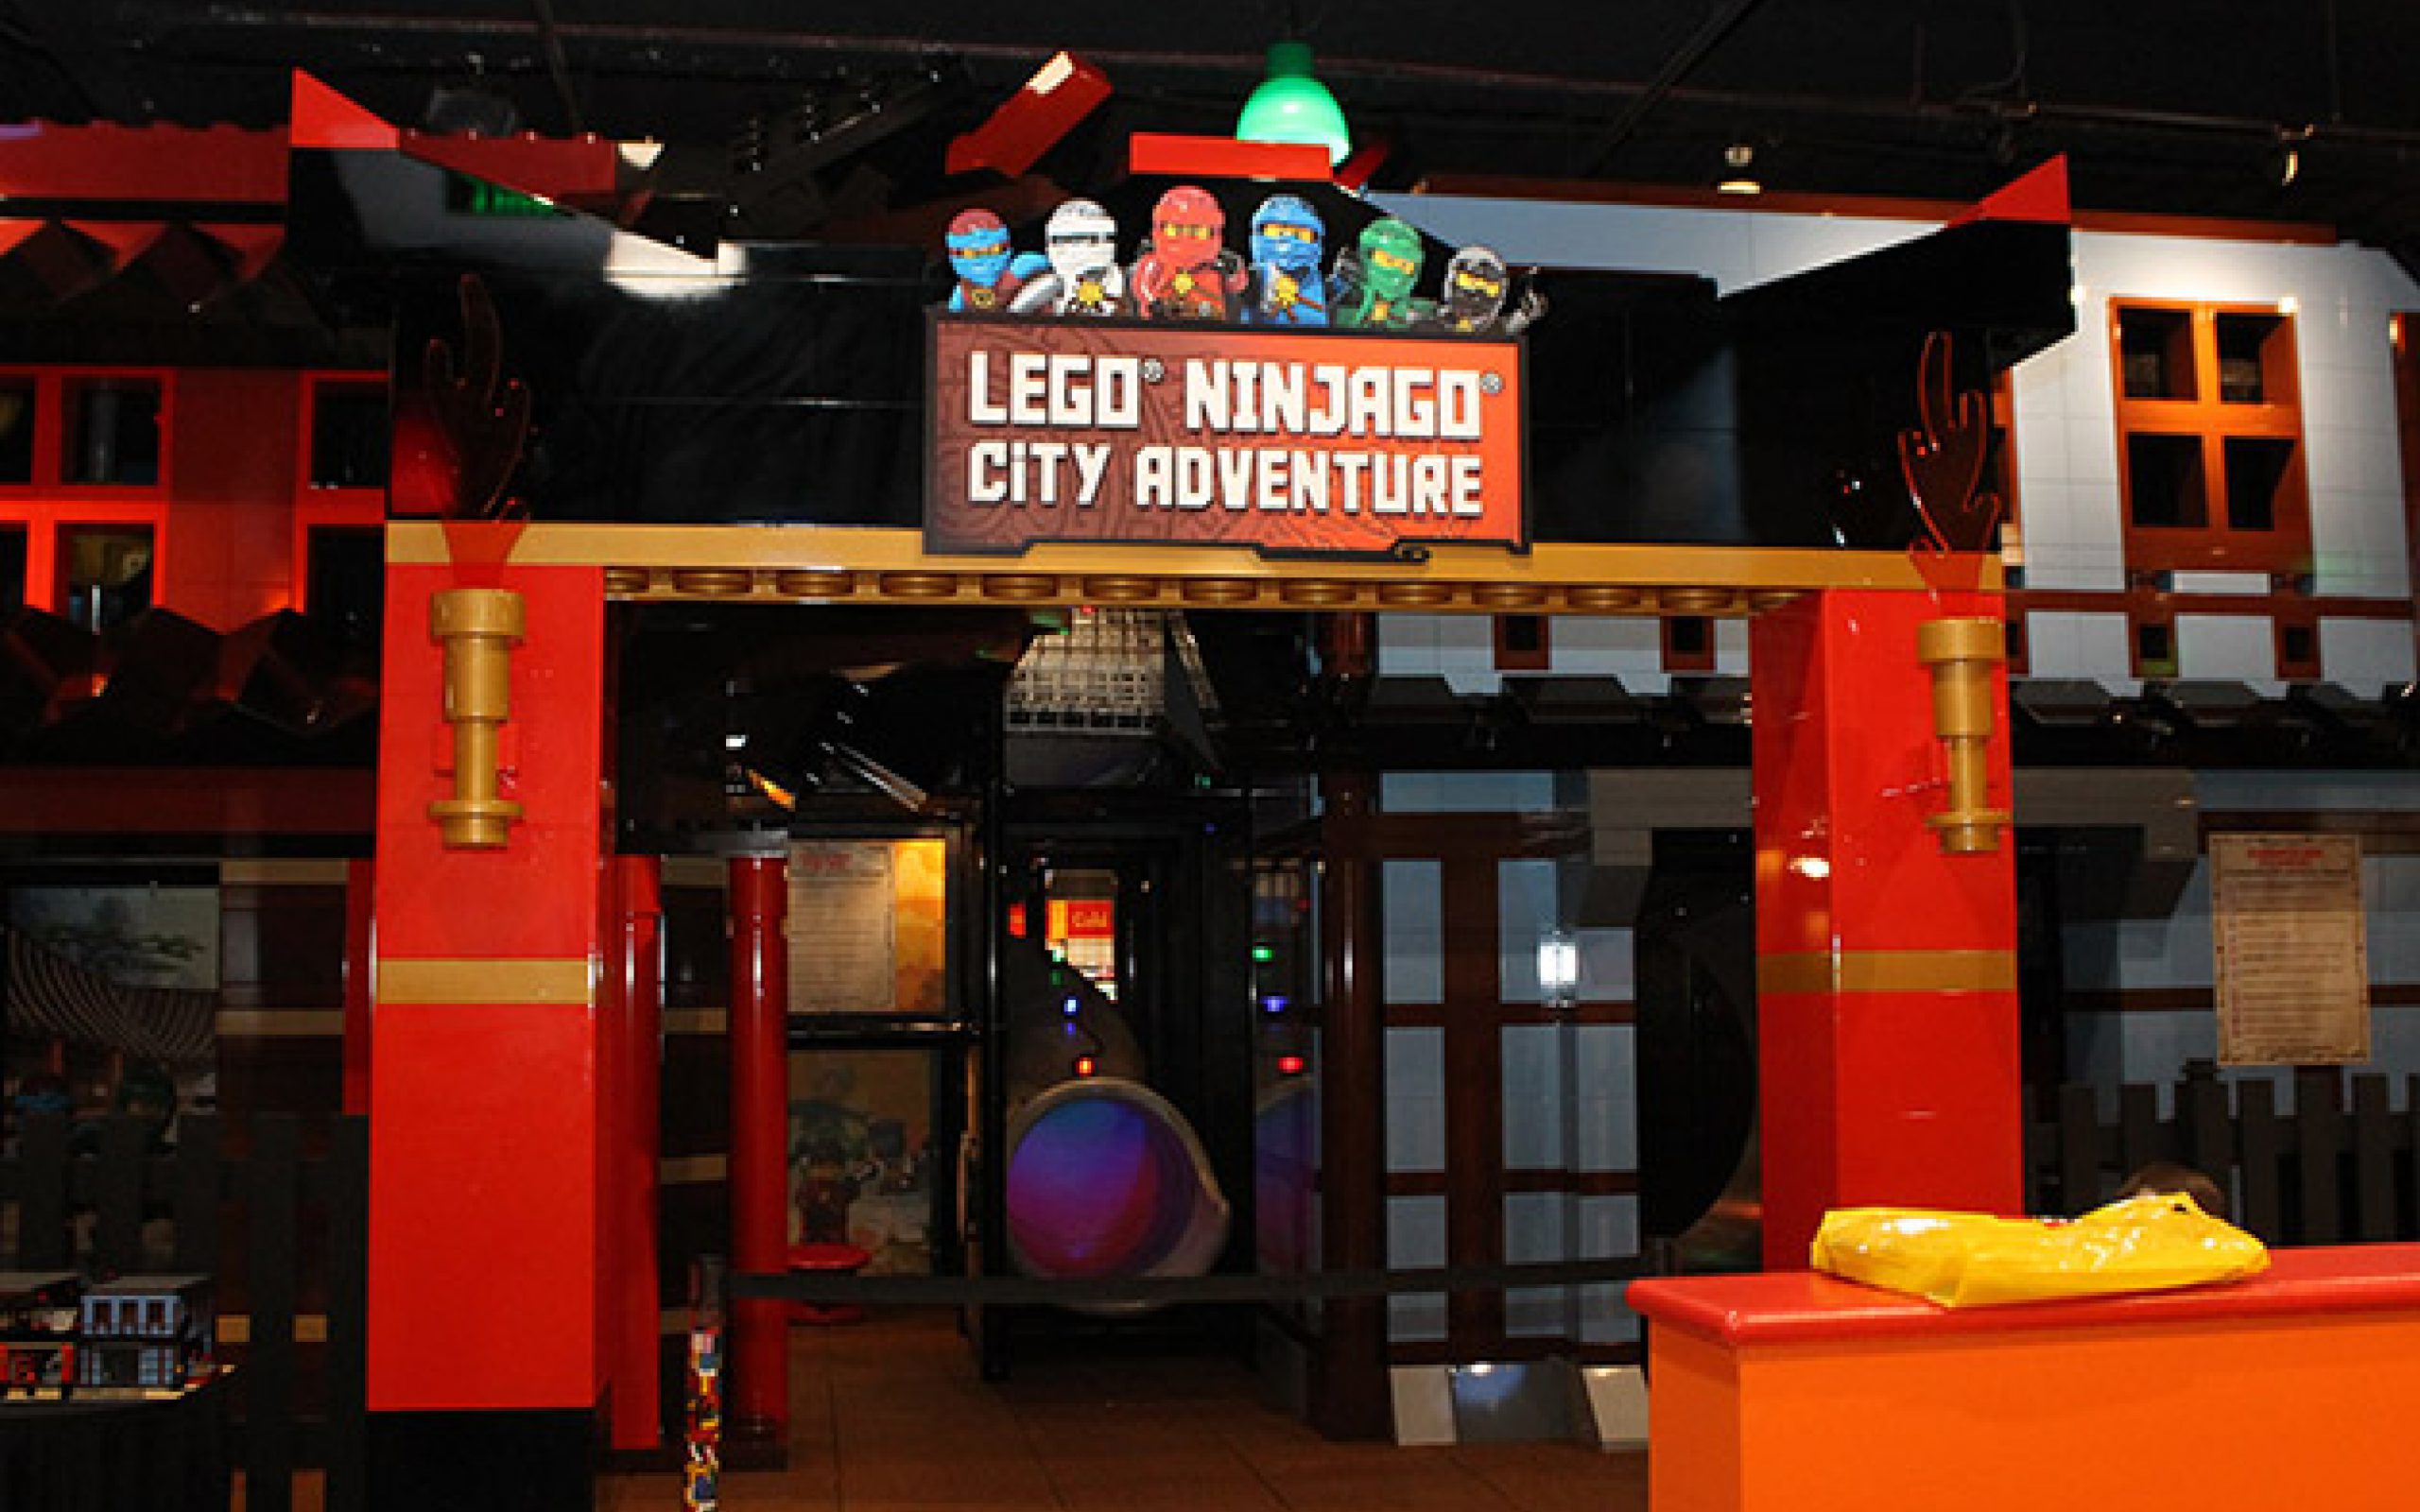 LEGO Ninjago themed entrance way